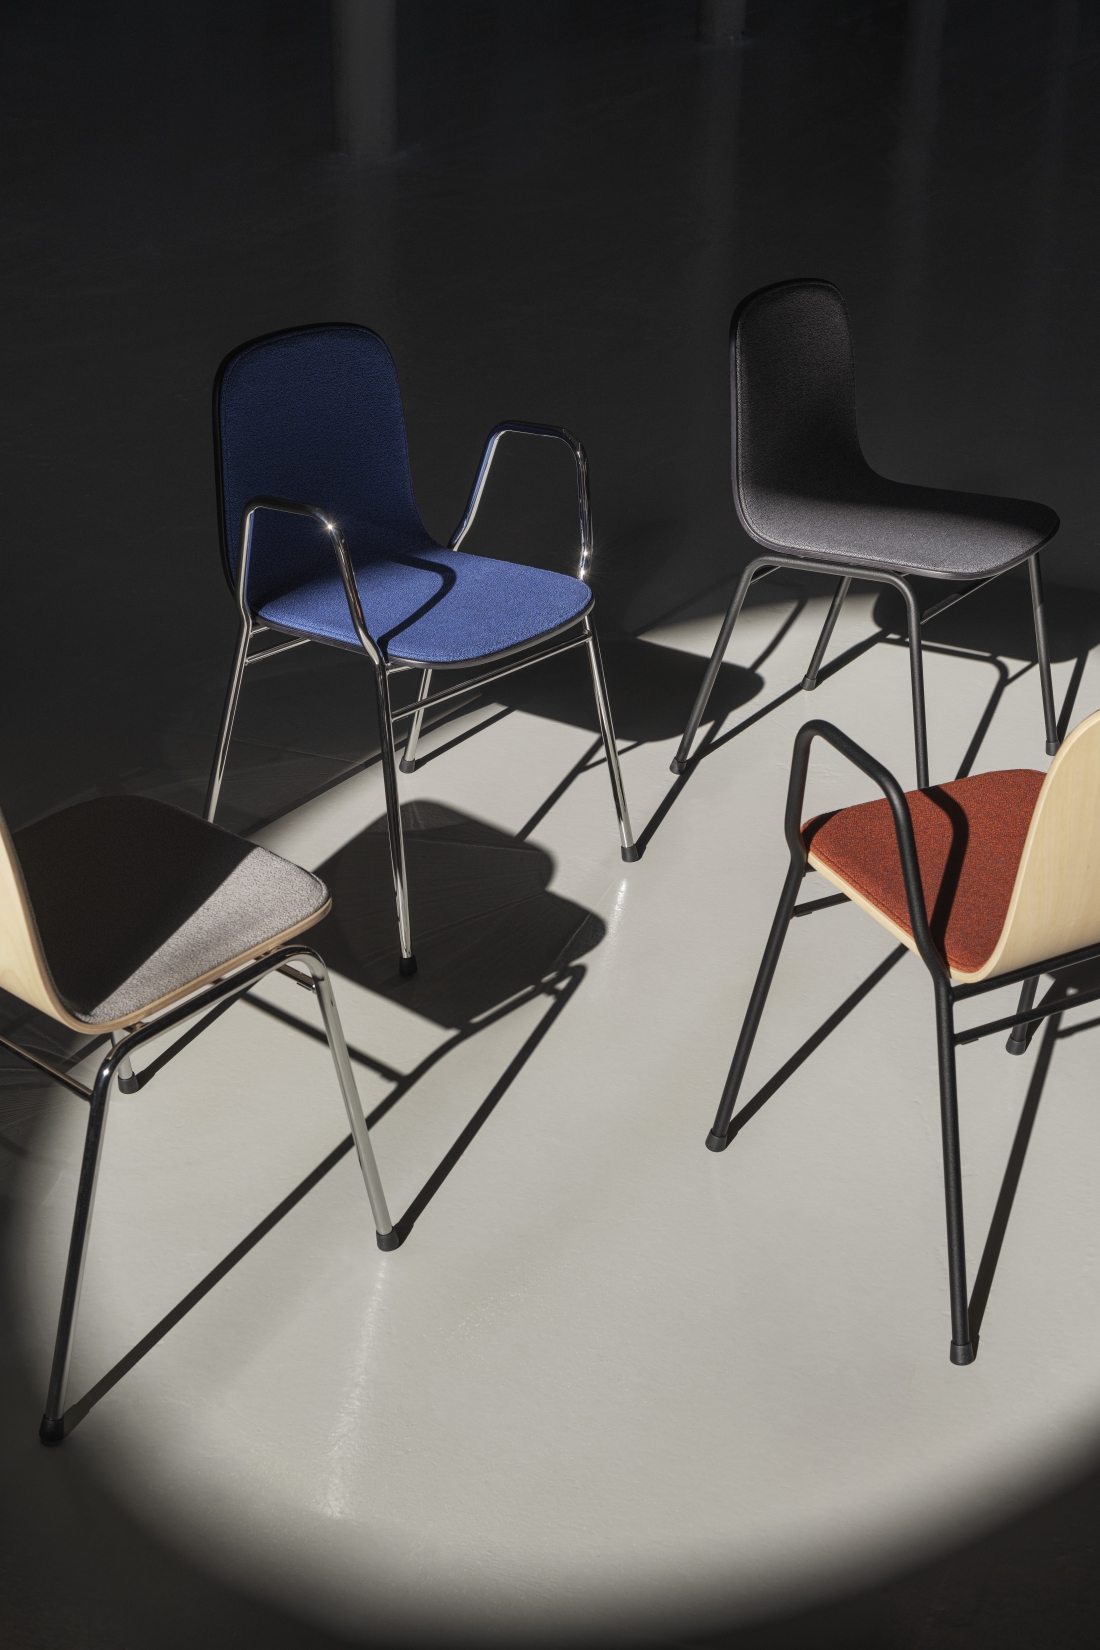 Hem - Touchwood Chair collection designed by Lars Beller Fjetland.